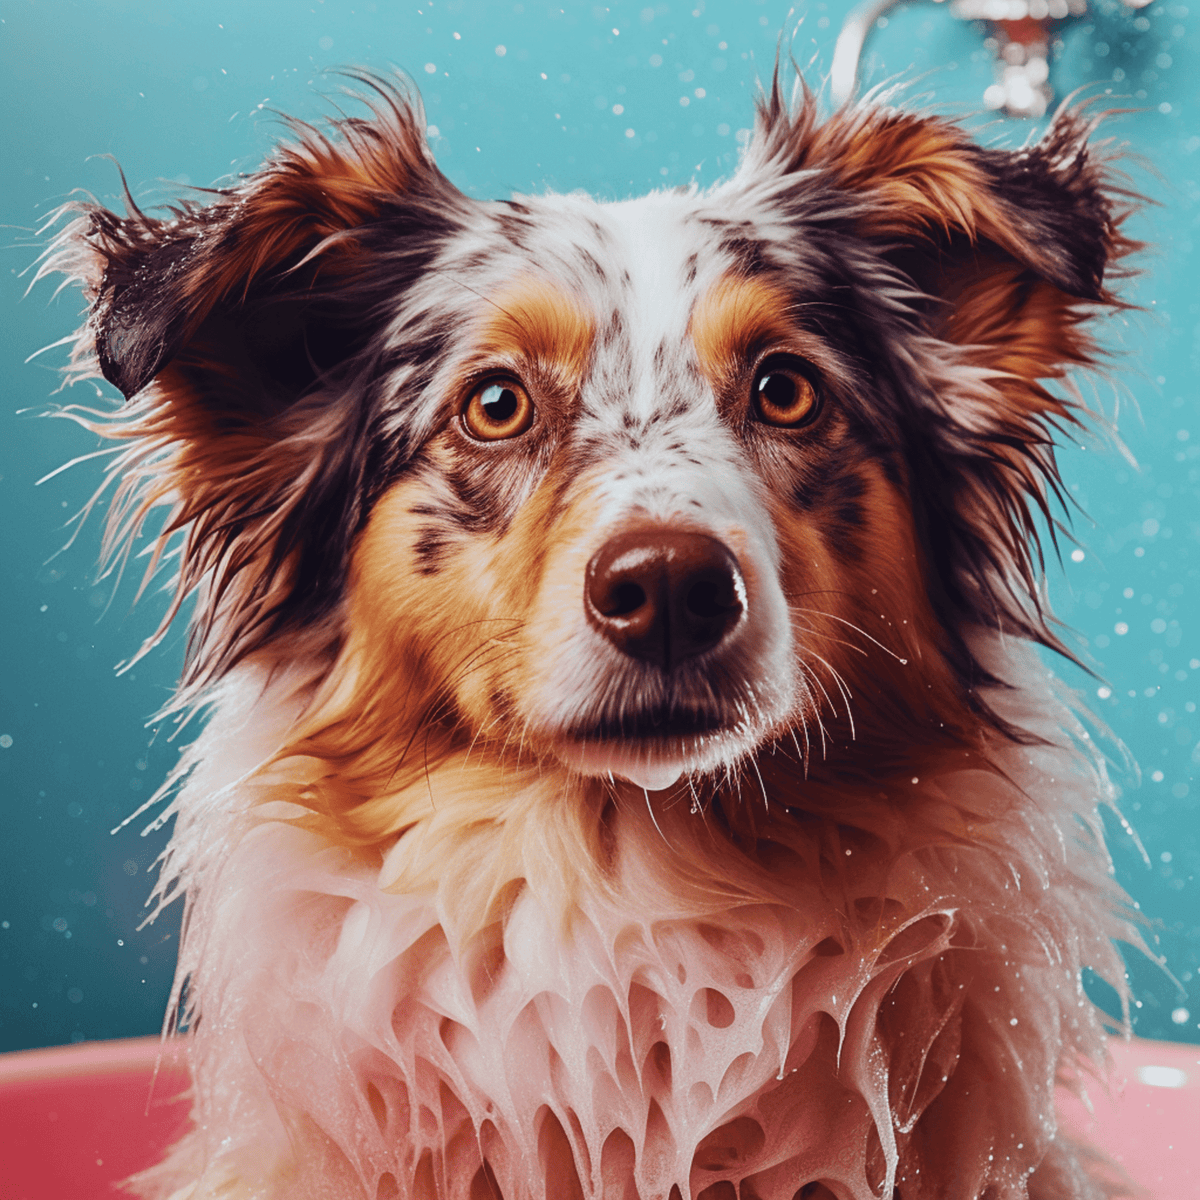 Cute dog in the bath wet